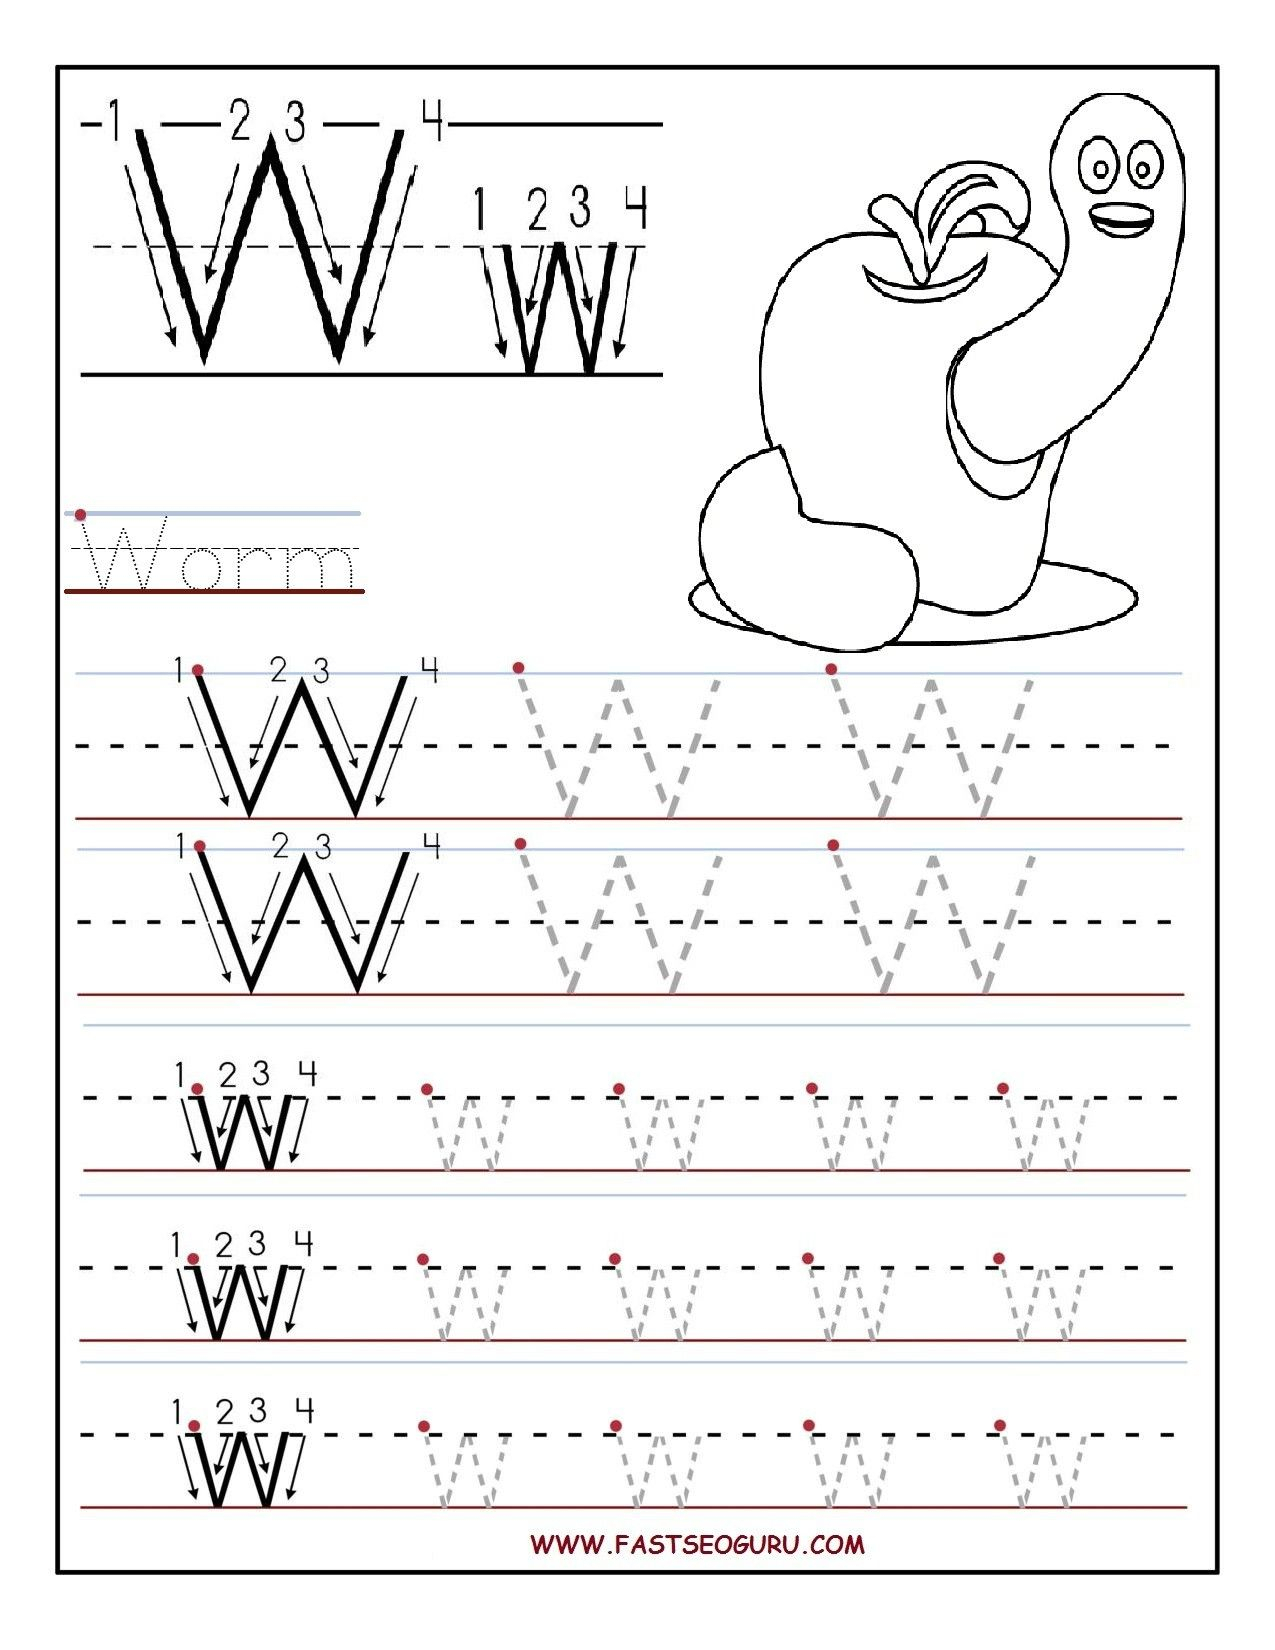 Letter W Tracing Sheet | AlphabetWorksheetsFree.com